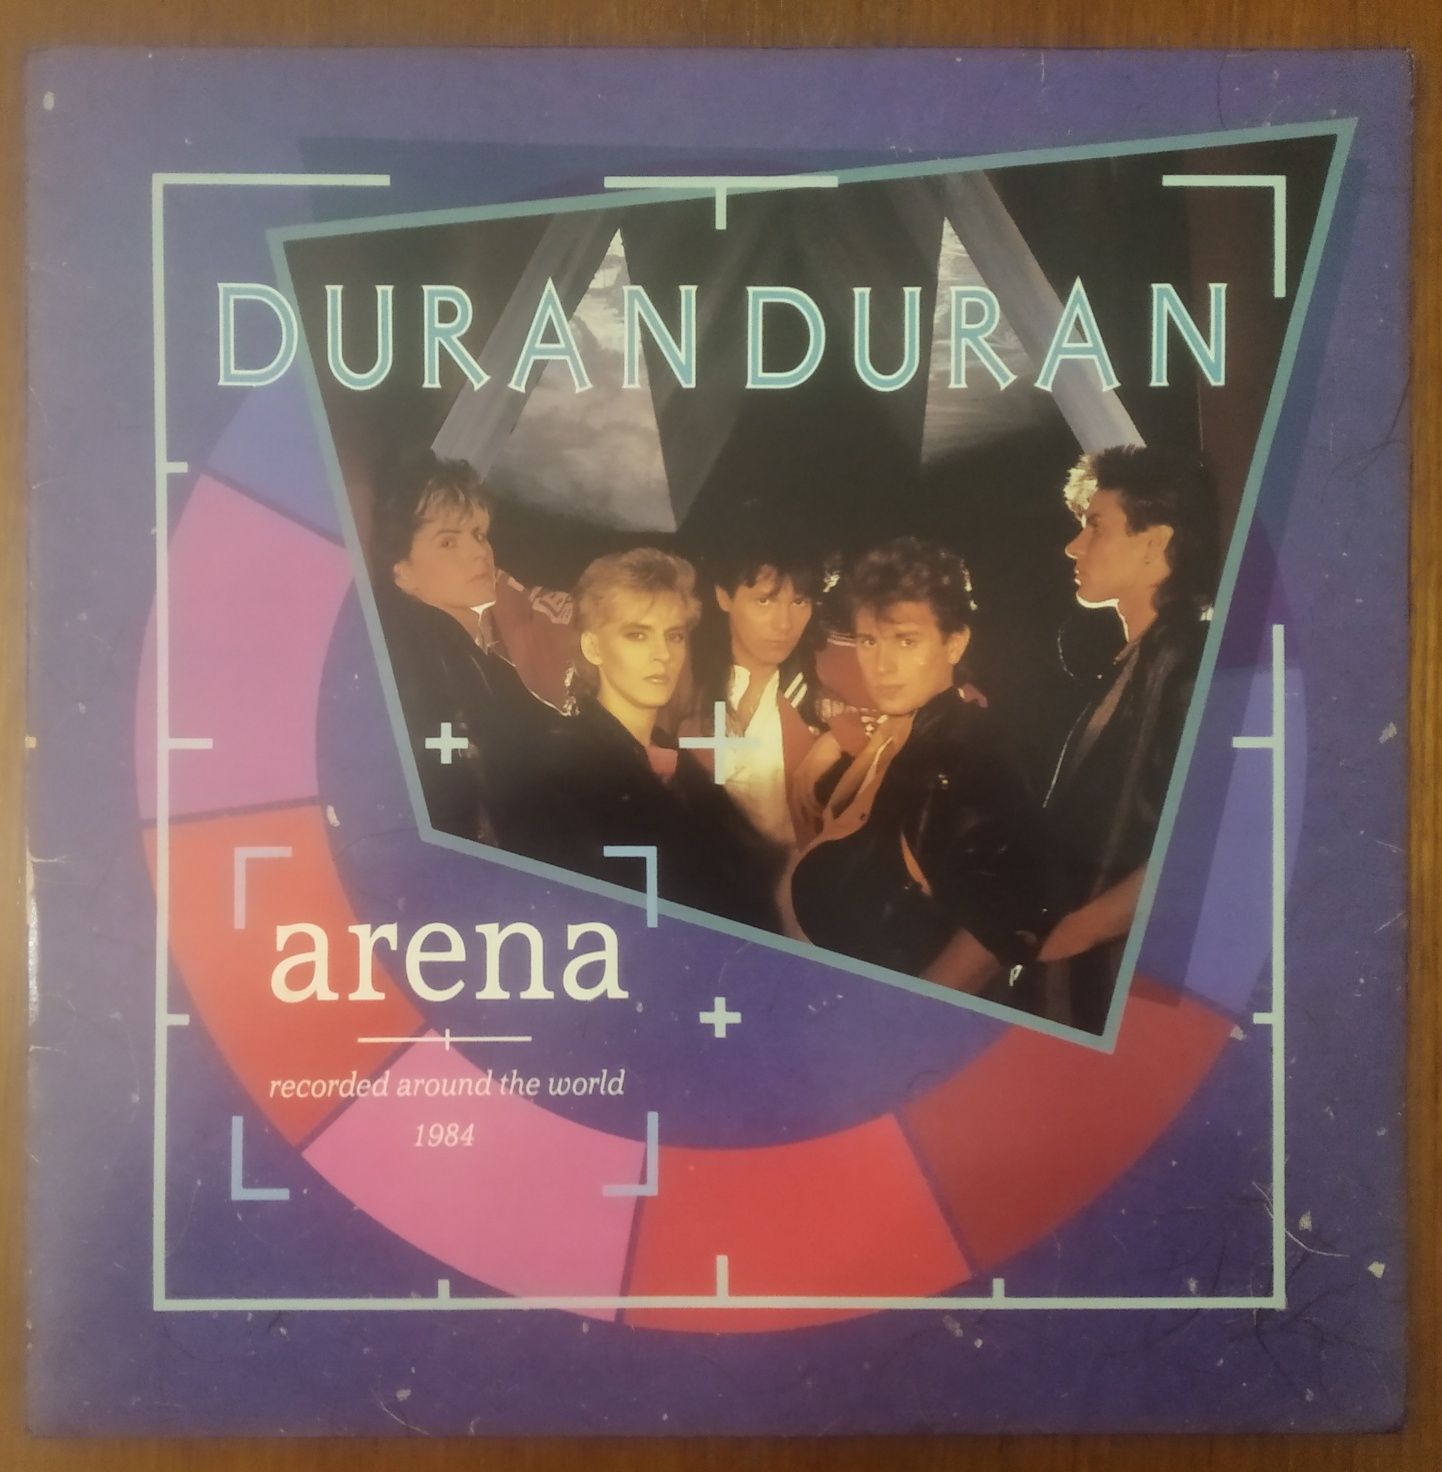 Duran Duran disco de vinil "Arena".